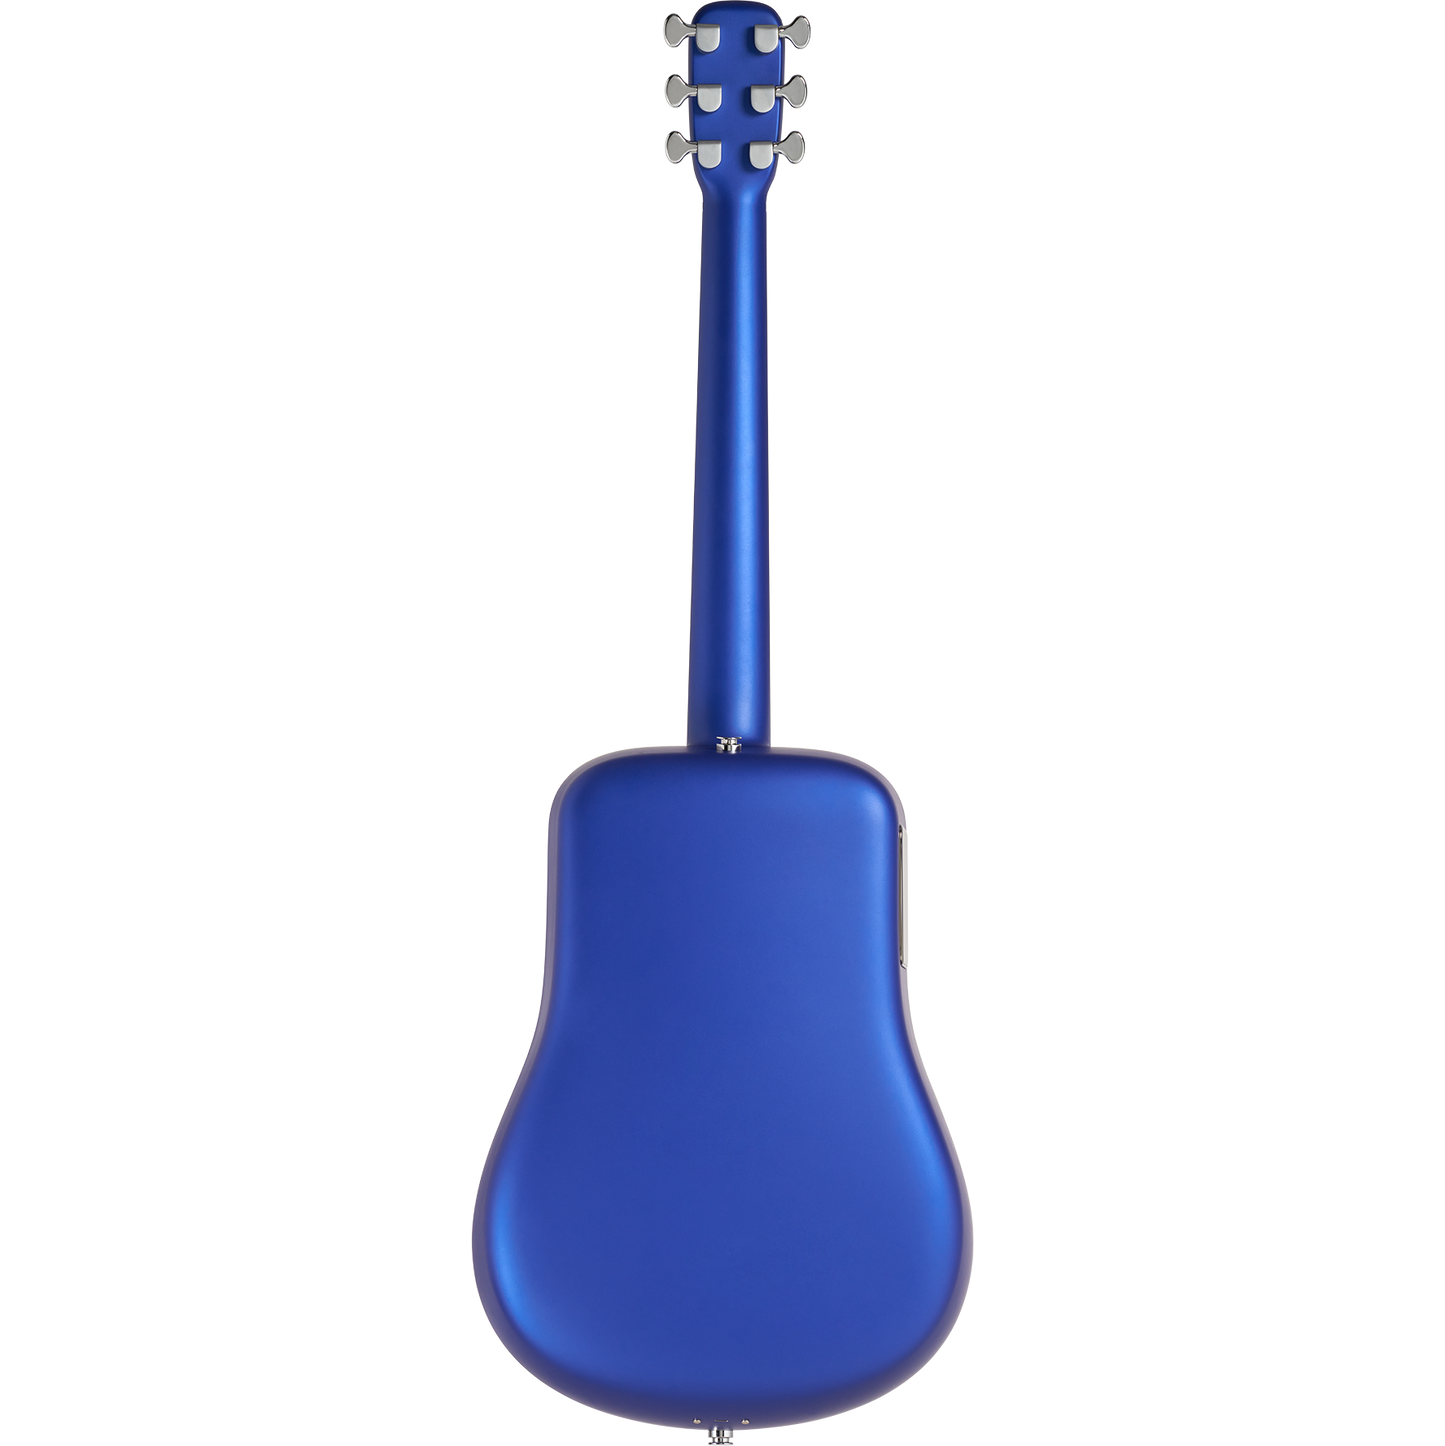 Lava Music Lava ME 3 36” Smart Guitar in Blue w/ Space Bag